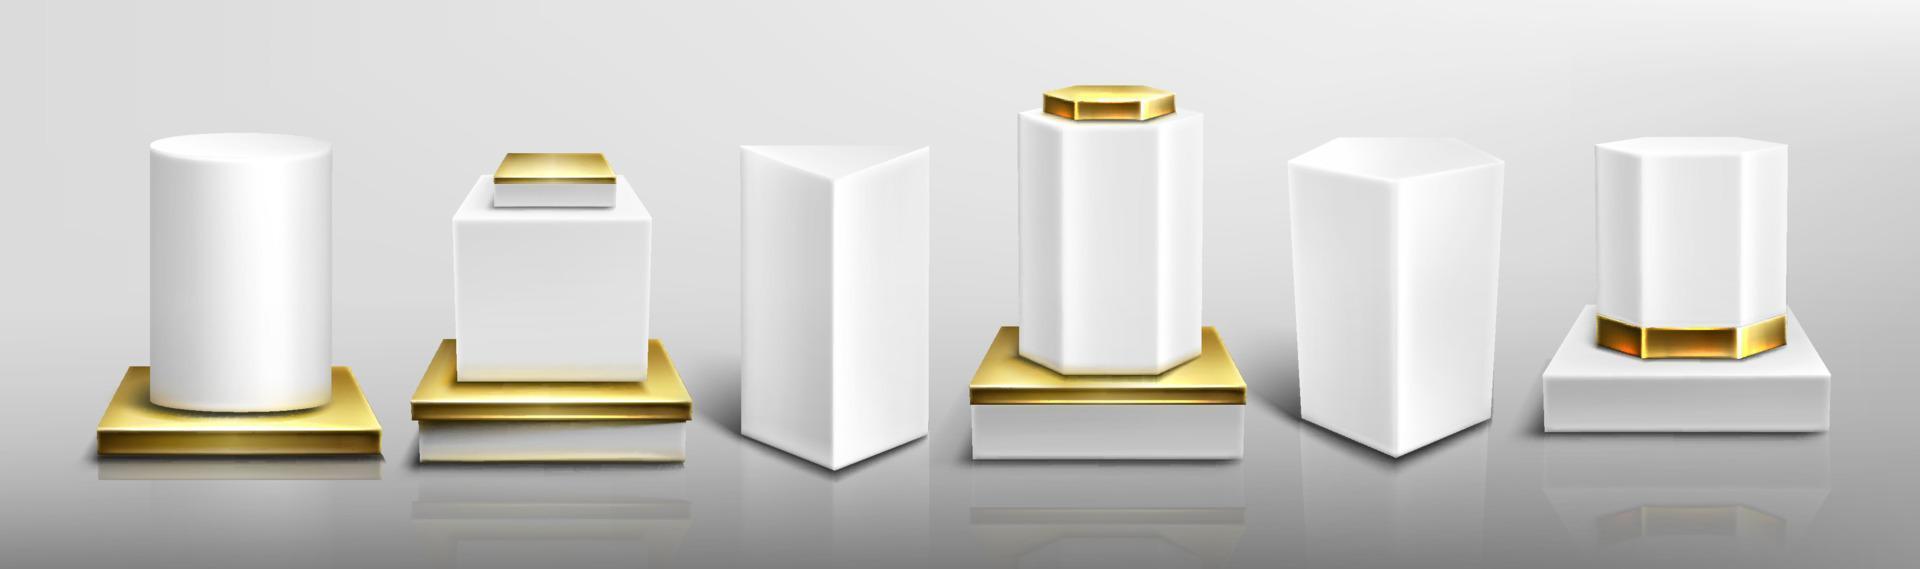 White pedestals or podiums with golden base set vector